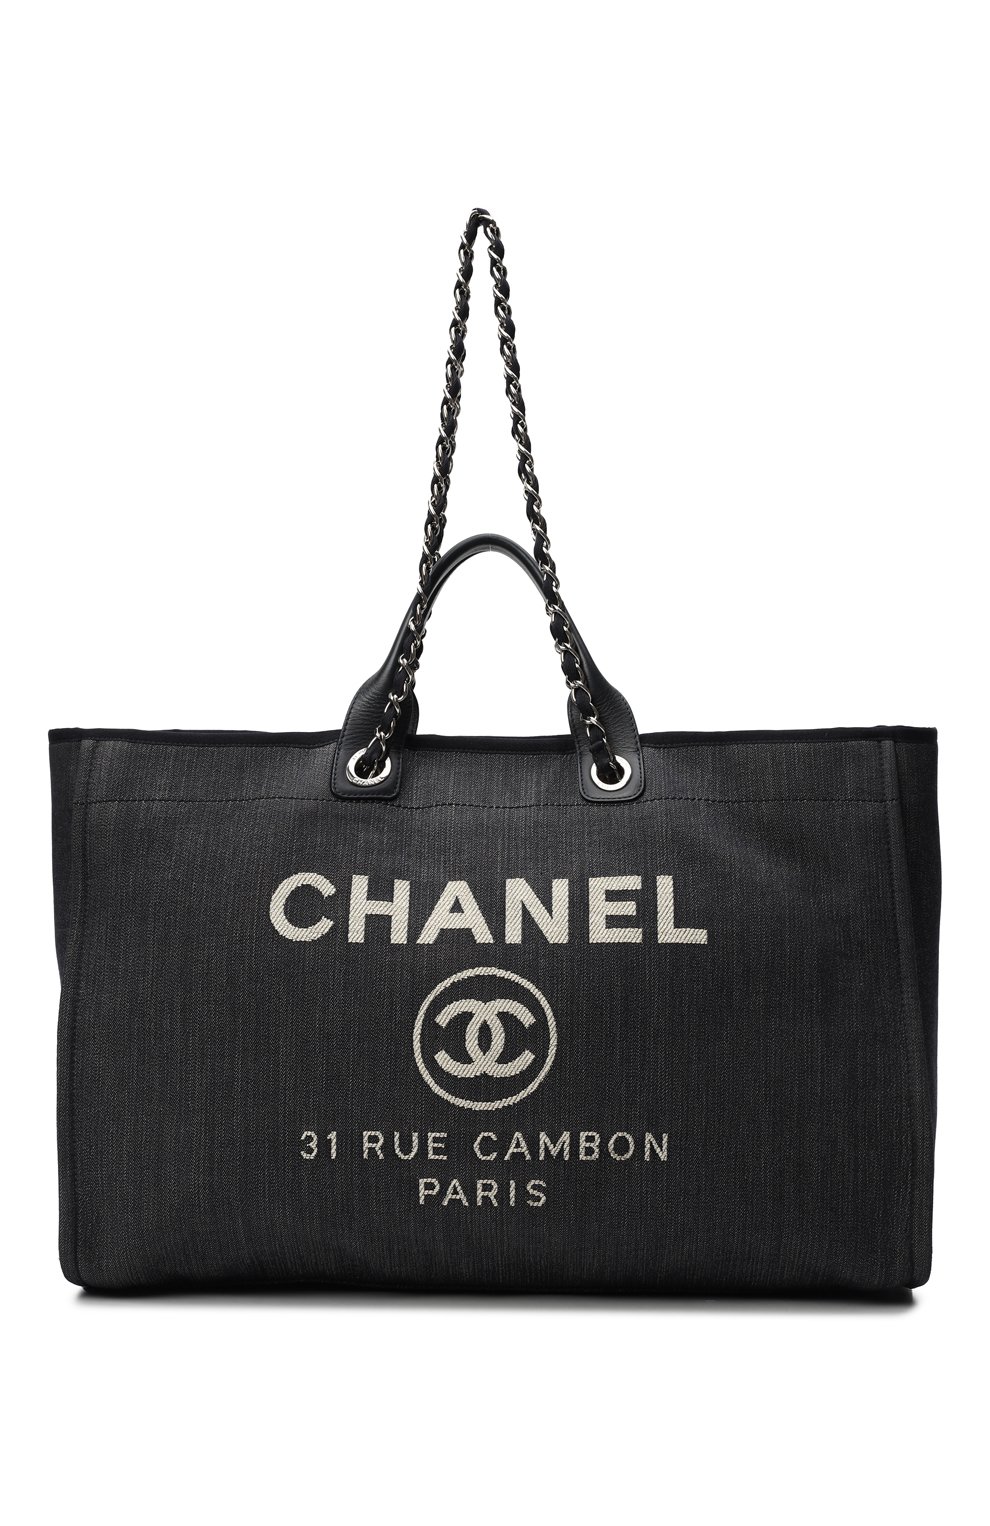 Сумка Chanel 31 rue Cambon. Chanel 31 rue Cambon Paris Light Grey big сумка женская. Сумка Шанель 31 rue Cambon Paris кожаная. Chanel Paris сумка.